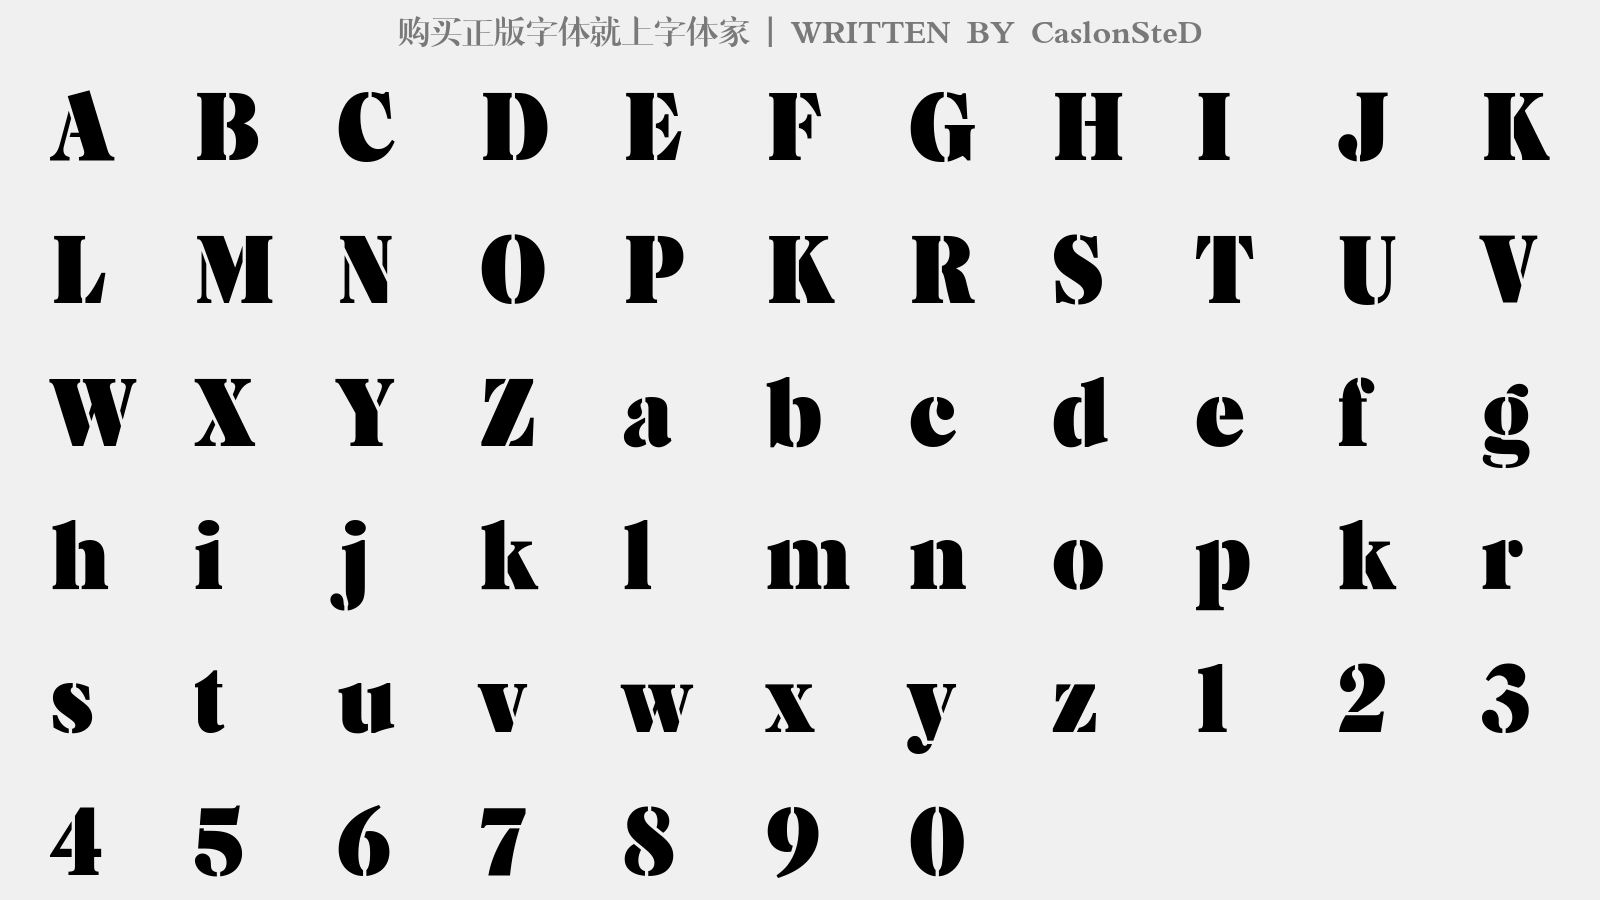 CaslonSteD - 大写字母/小写字母/数字